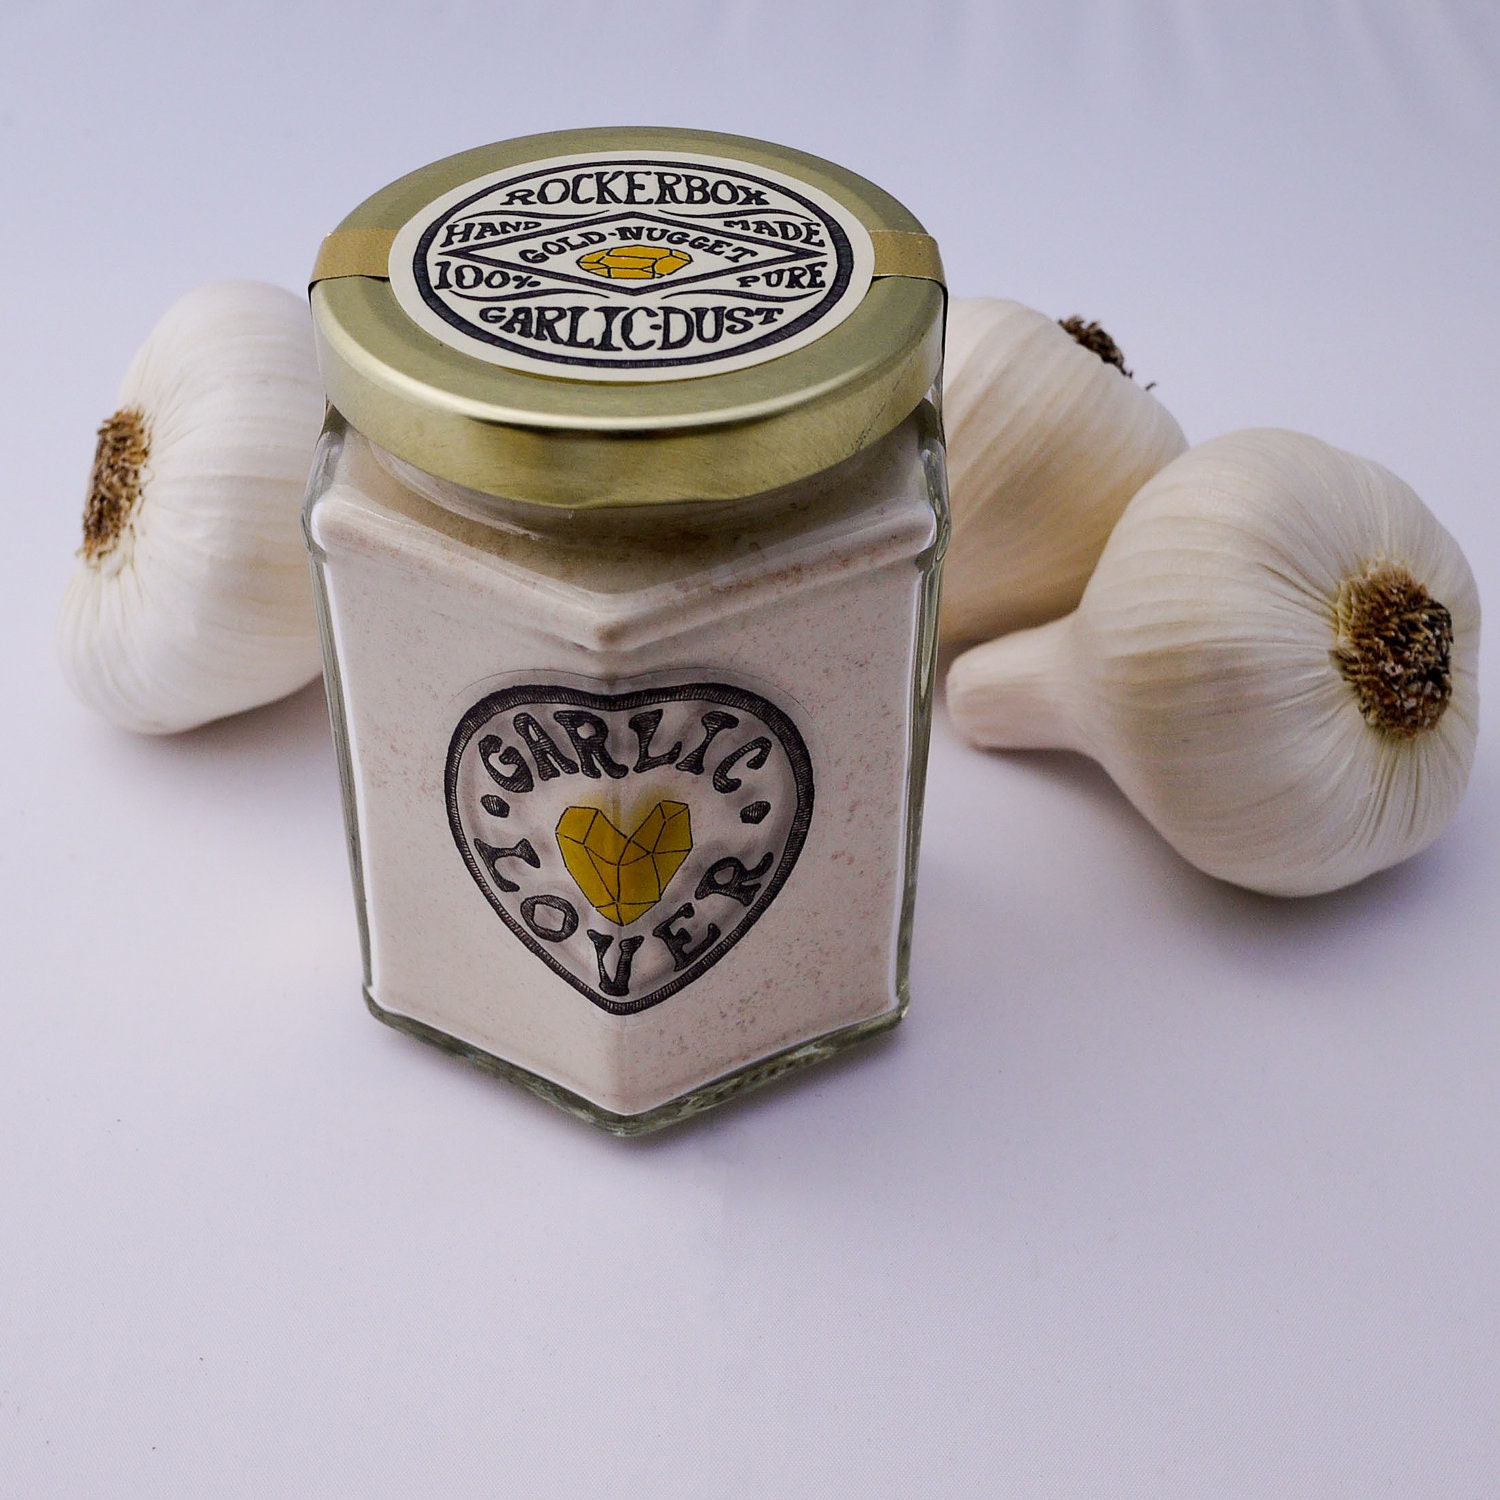 Gourmet Garlic Powder, Garlic Lover's Size - 12 oz total - RockerboxGarlic